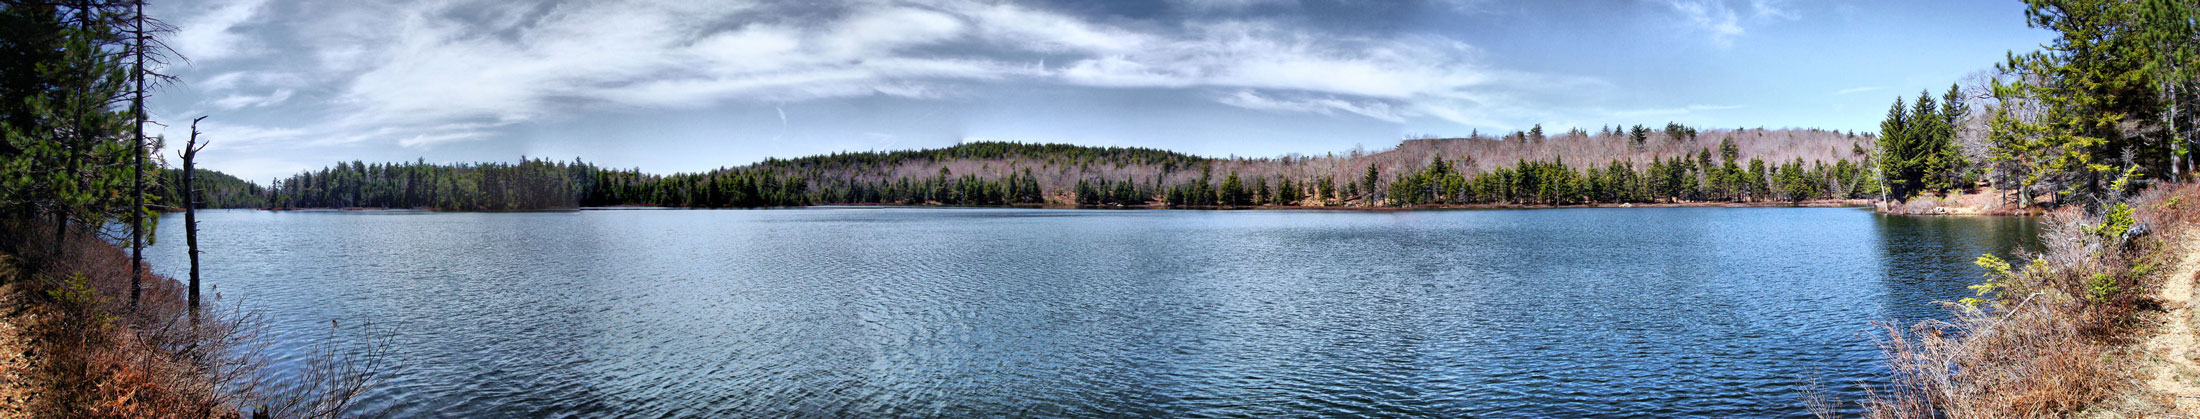 Round Pond Panoramic View